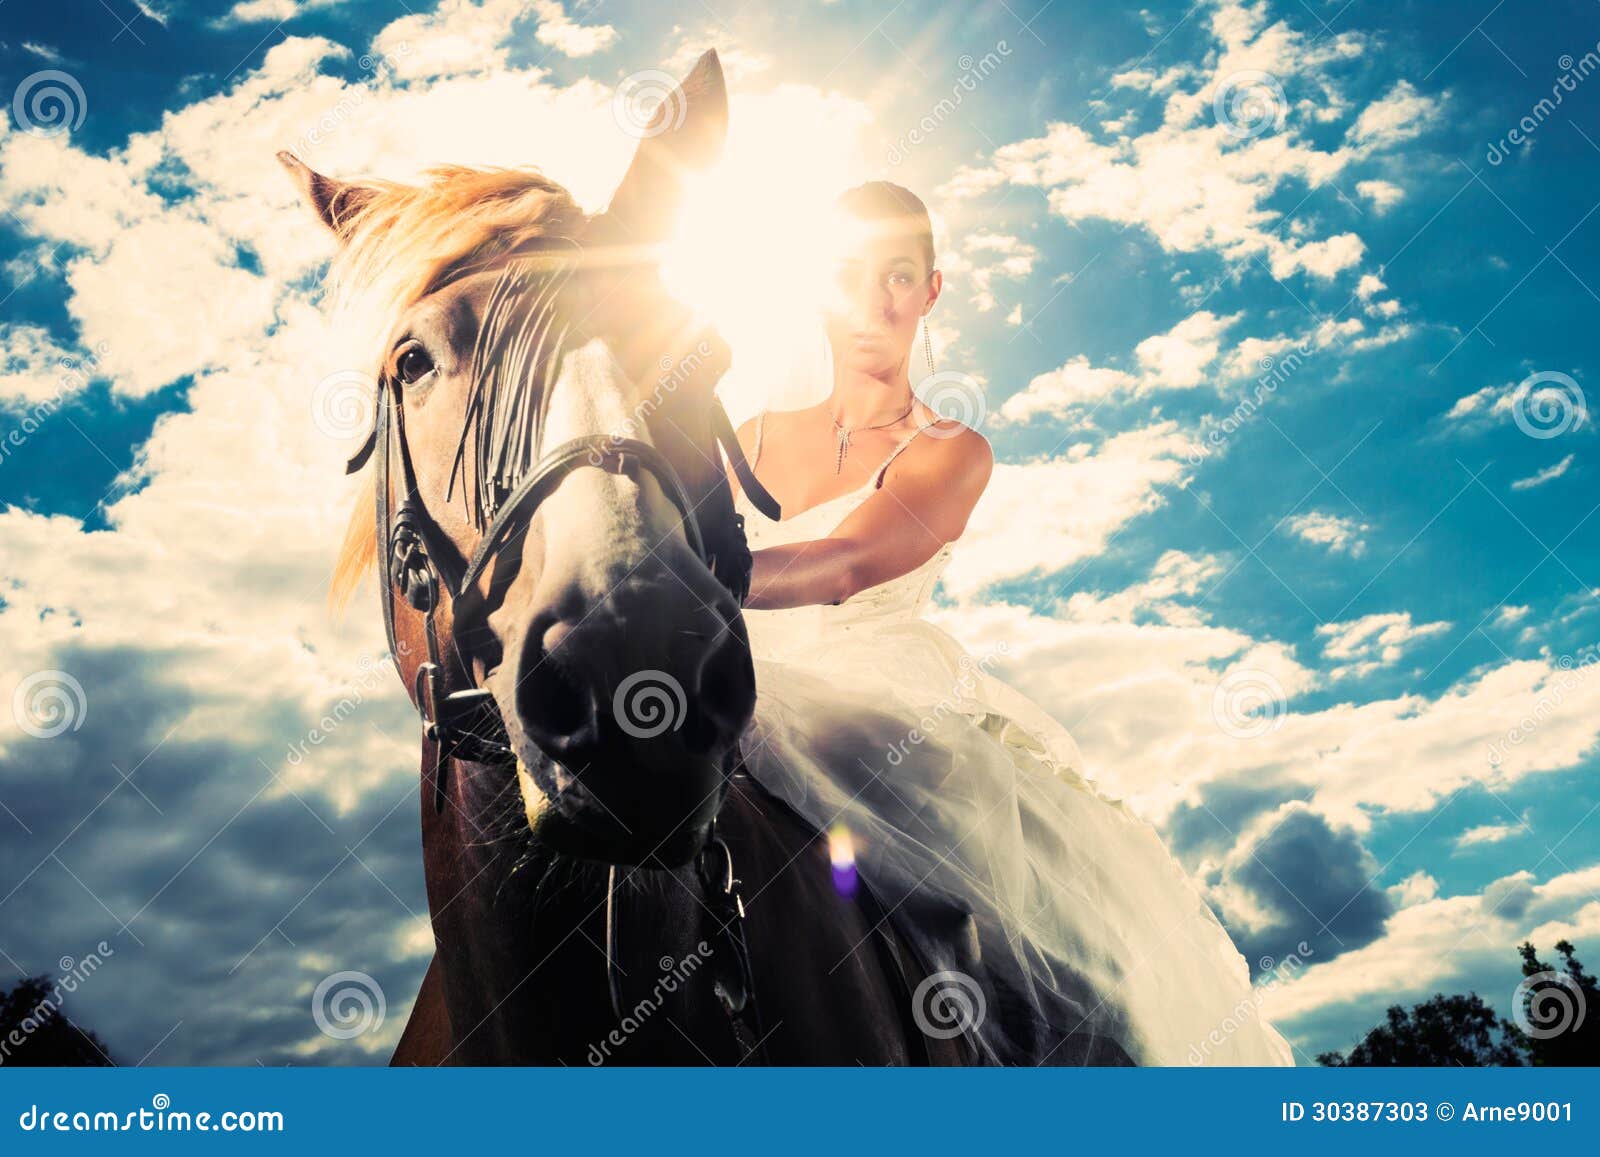 bride in wedding dress riding a horse, backlit